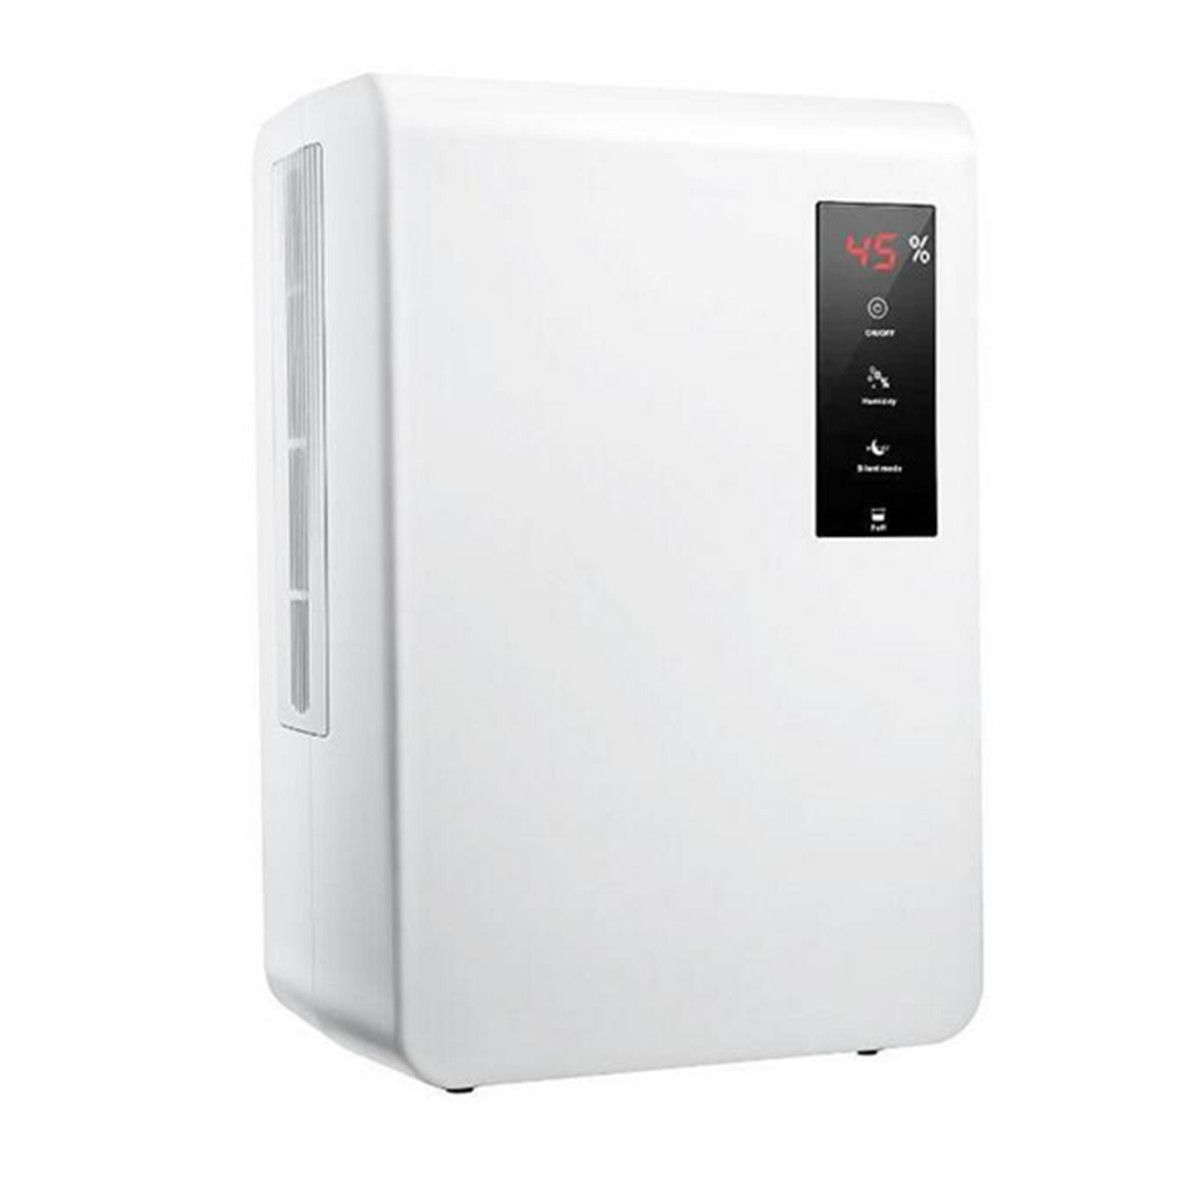 3L-150W-Smart-Dehumidifier-Electric-Eliminating-Moisture-in-Home-Dehumidifying-Air-Dryer-1401102